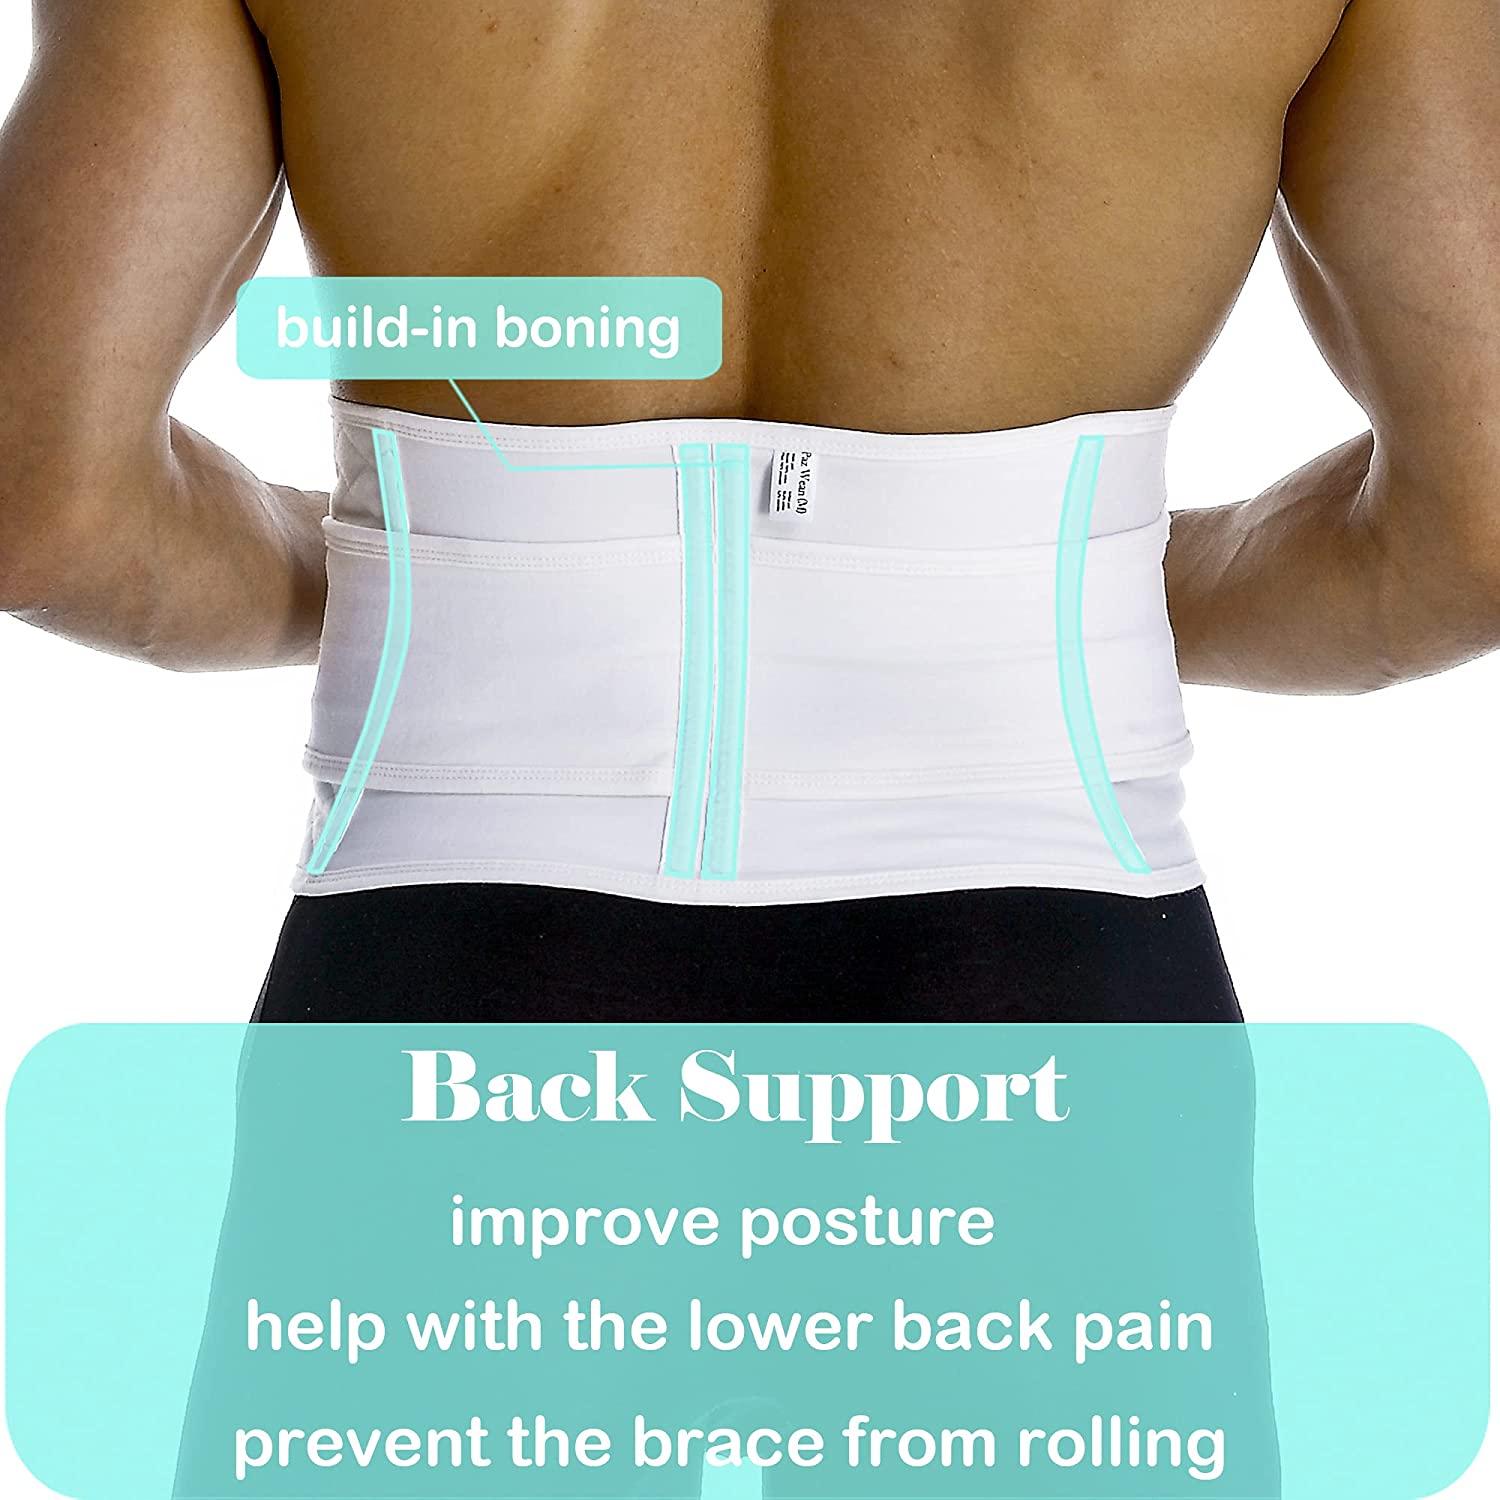 Abdominal Binder | Belly Band Stomach Hernia Support Brace & Back Support  Belt